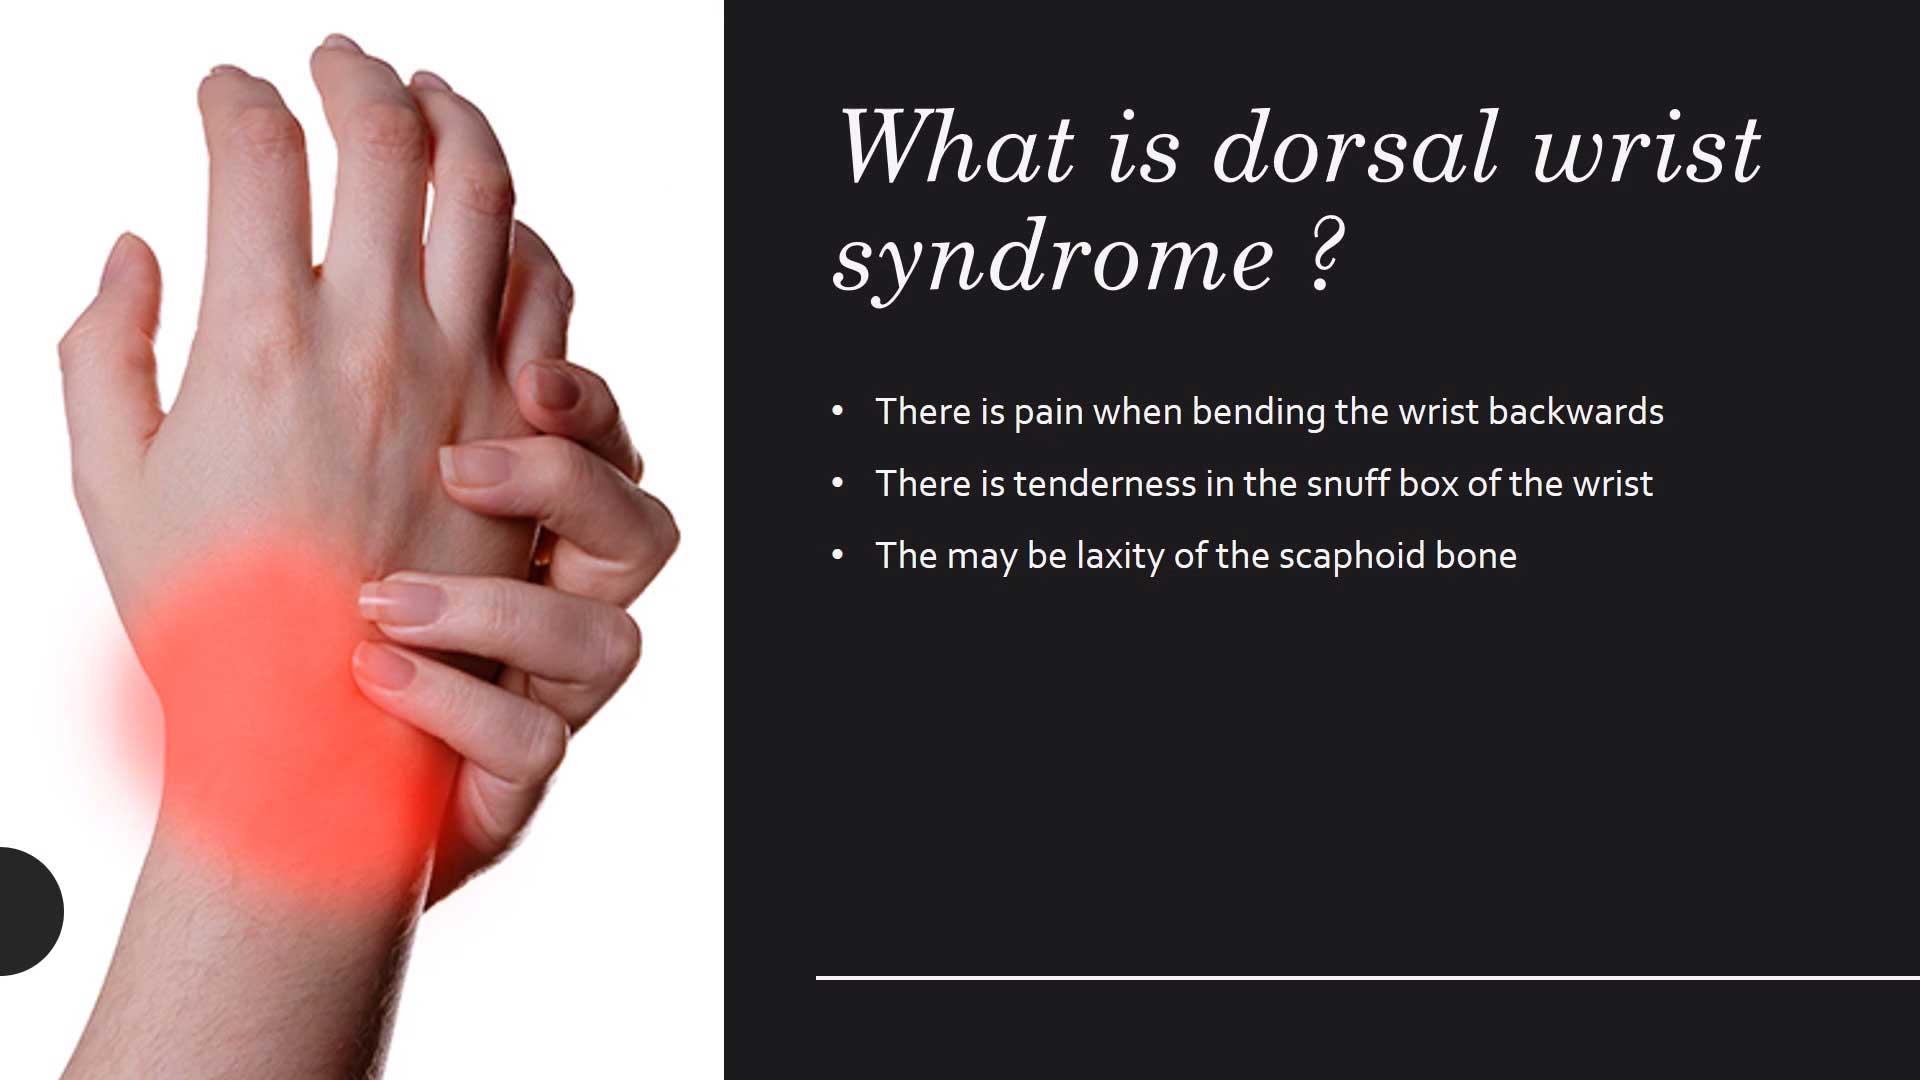 dorsiflexion of wrist